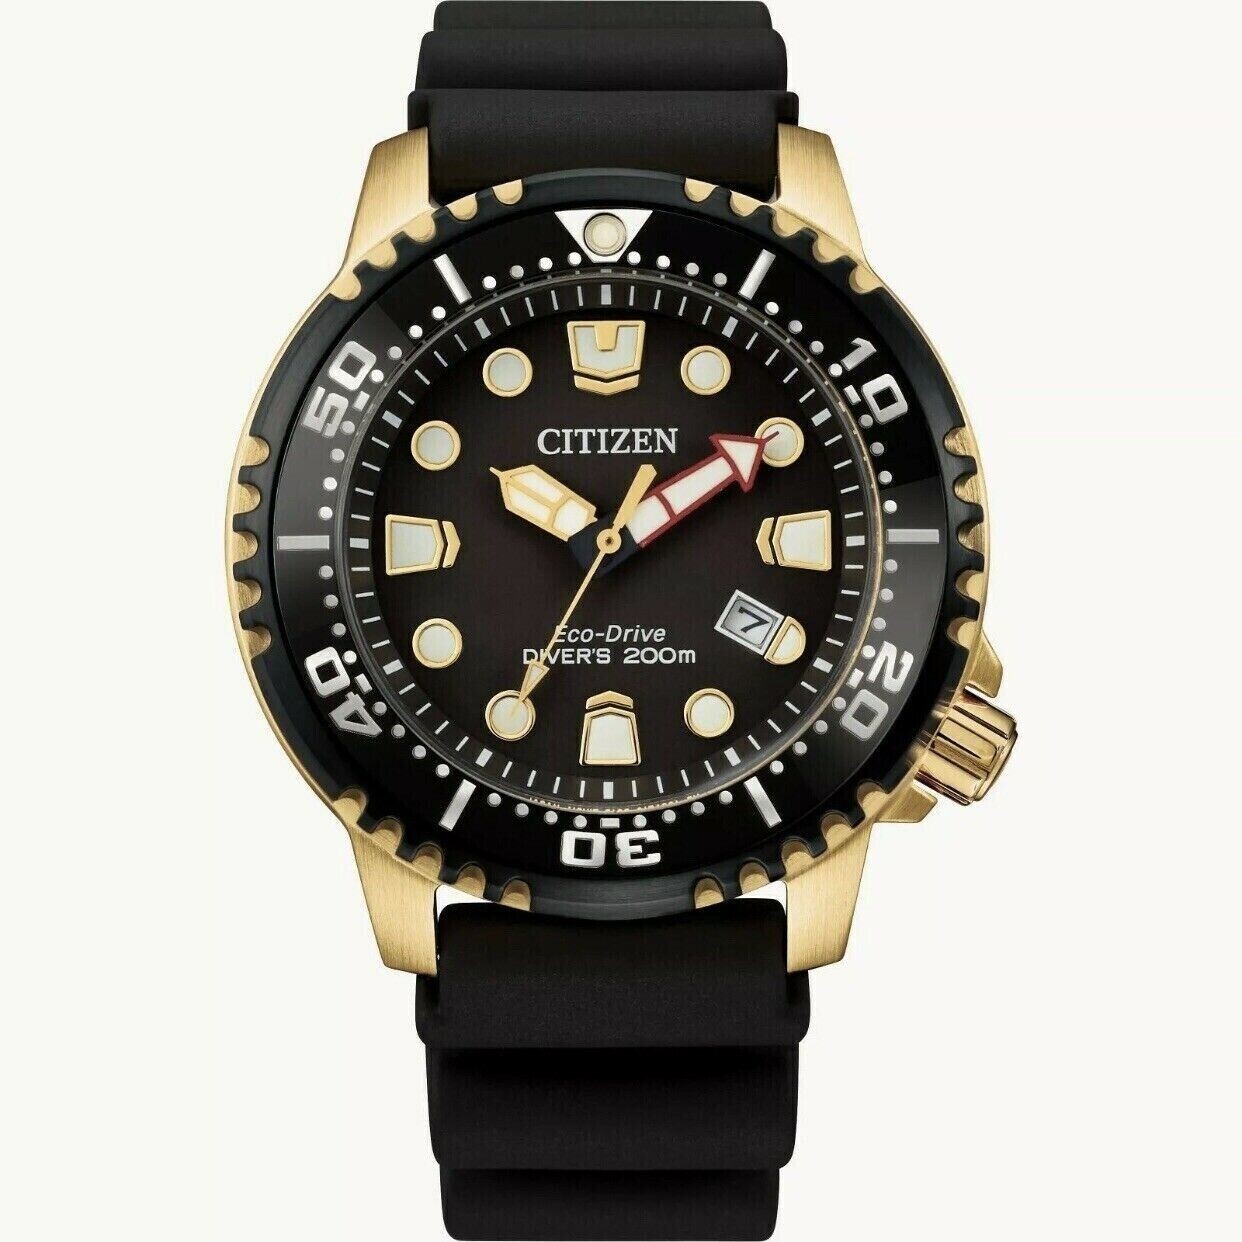 Citizen Ecodrive Promaster BN0152-06E 44mm divers scuba mens’ watch black dial polyurethane band 200m water resist